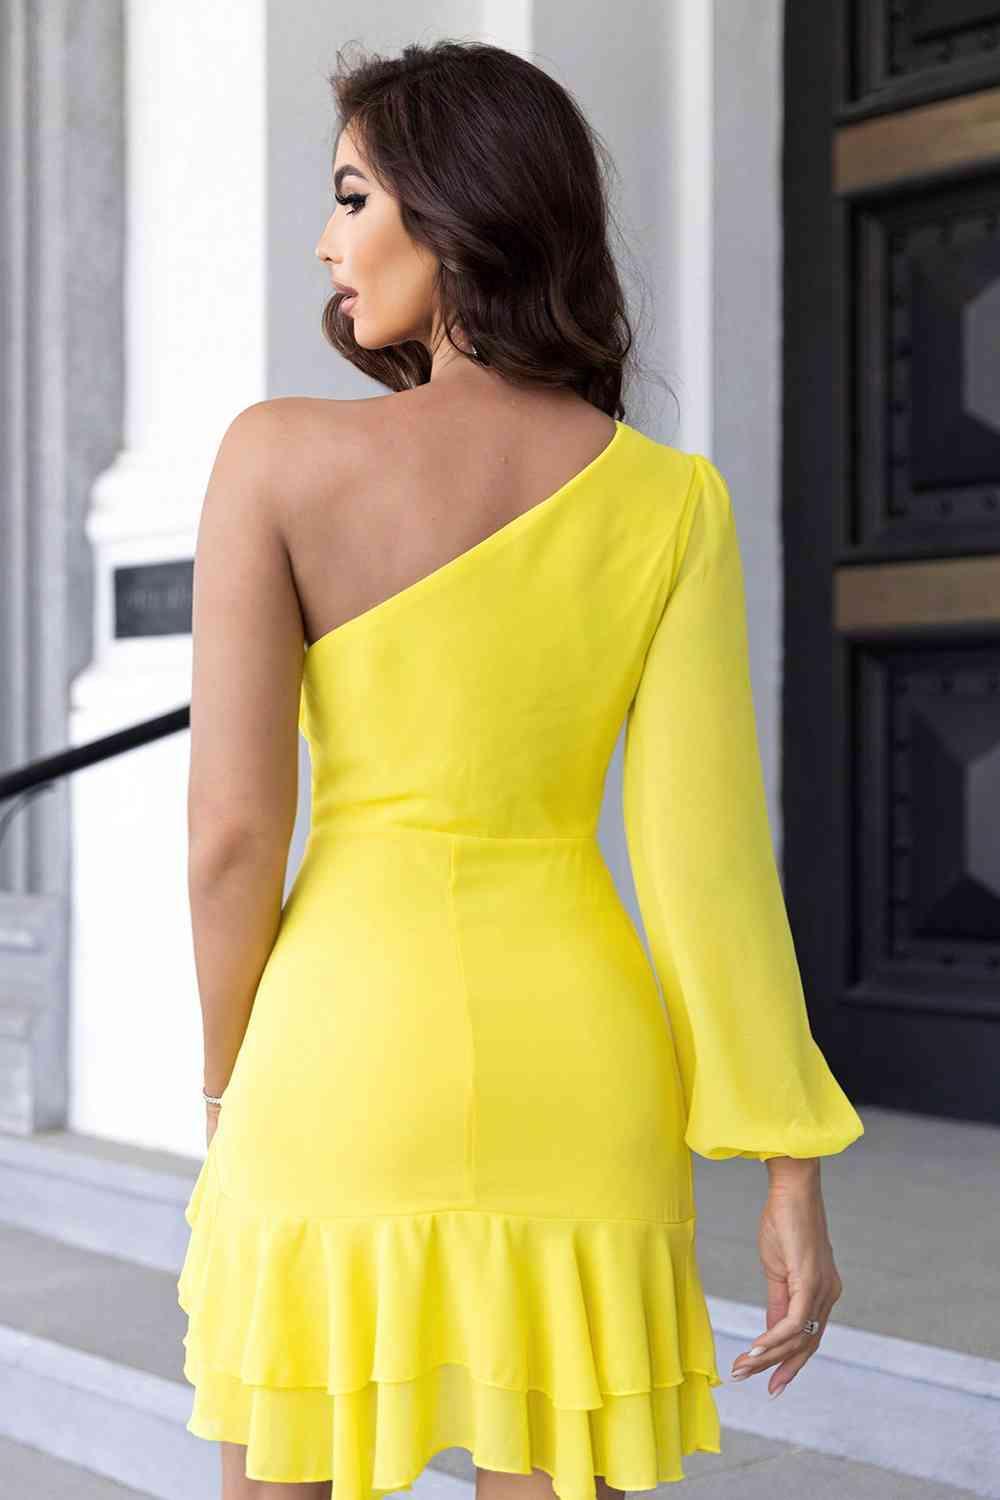 Bona Fide Fashion - Cutout One-Shoulder Tied Dress - Women Fashion - Bona Fide Fashion